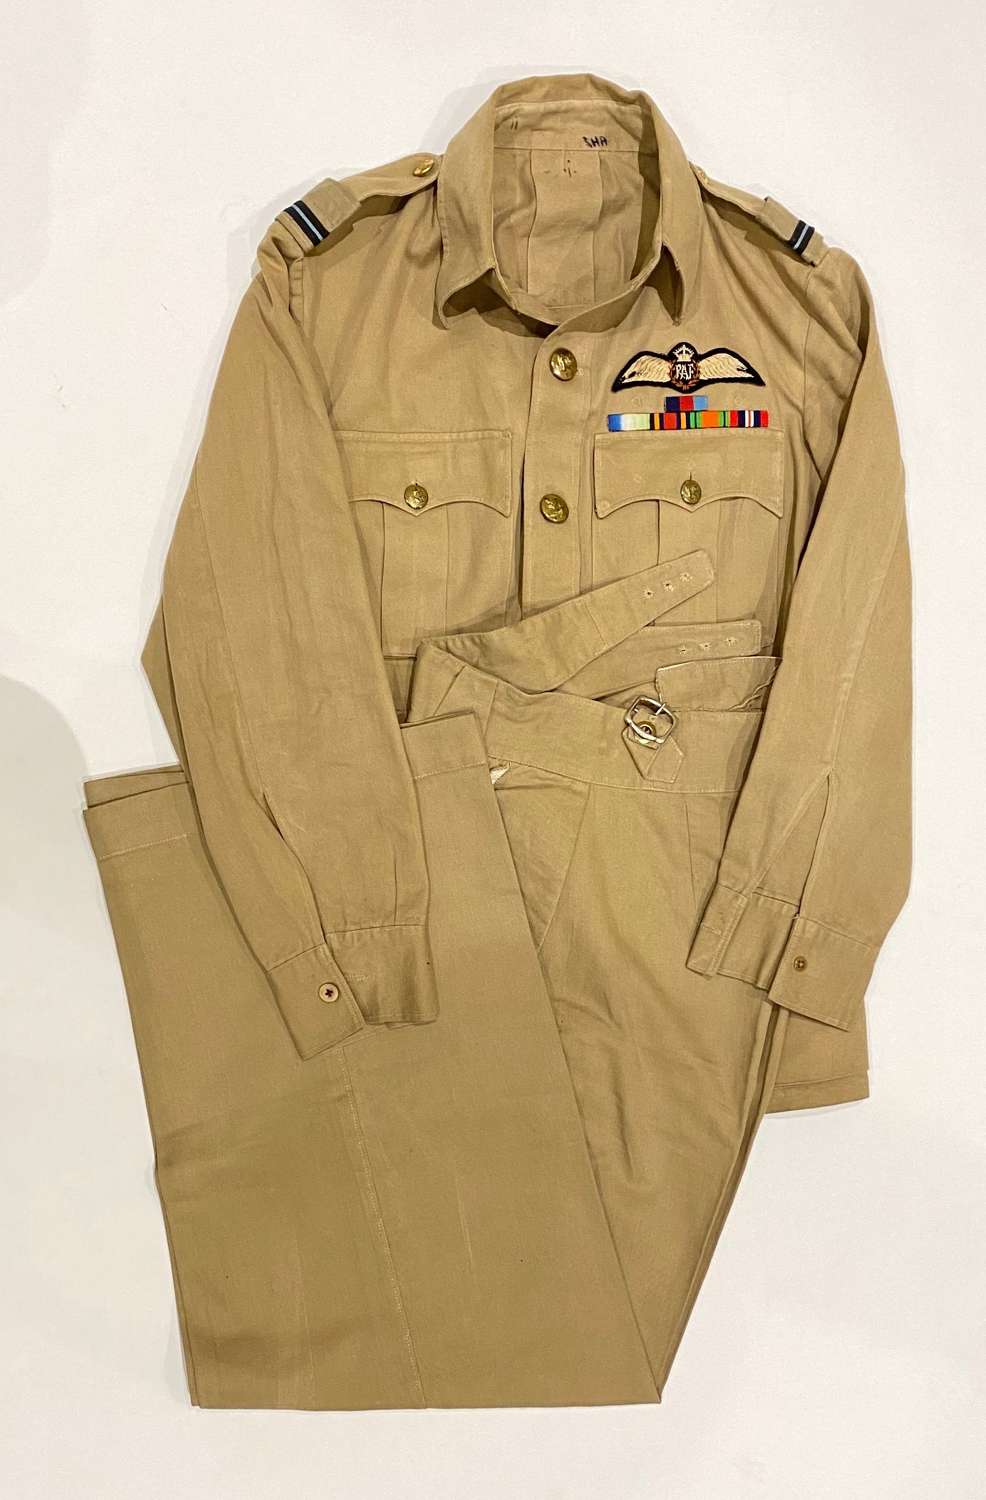 WW2 Period RAF Tropical KD Pilot’s Uniform.